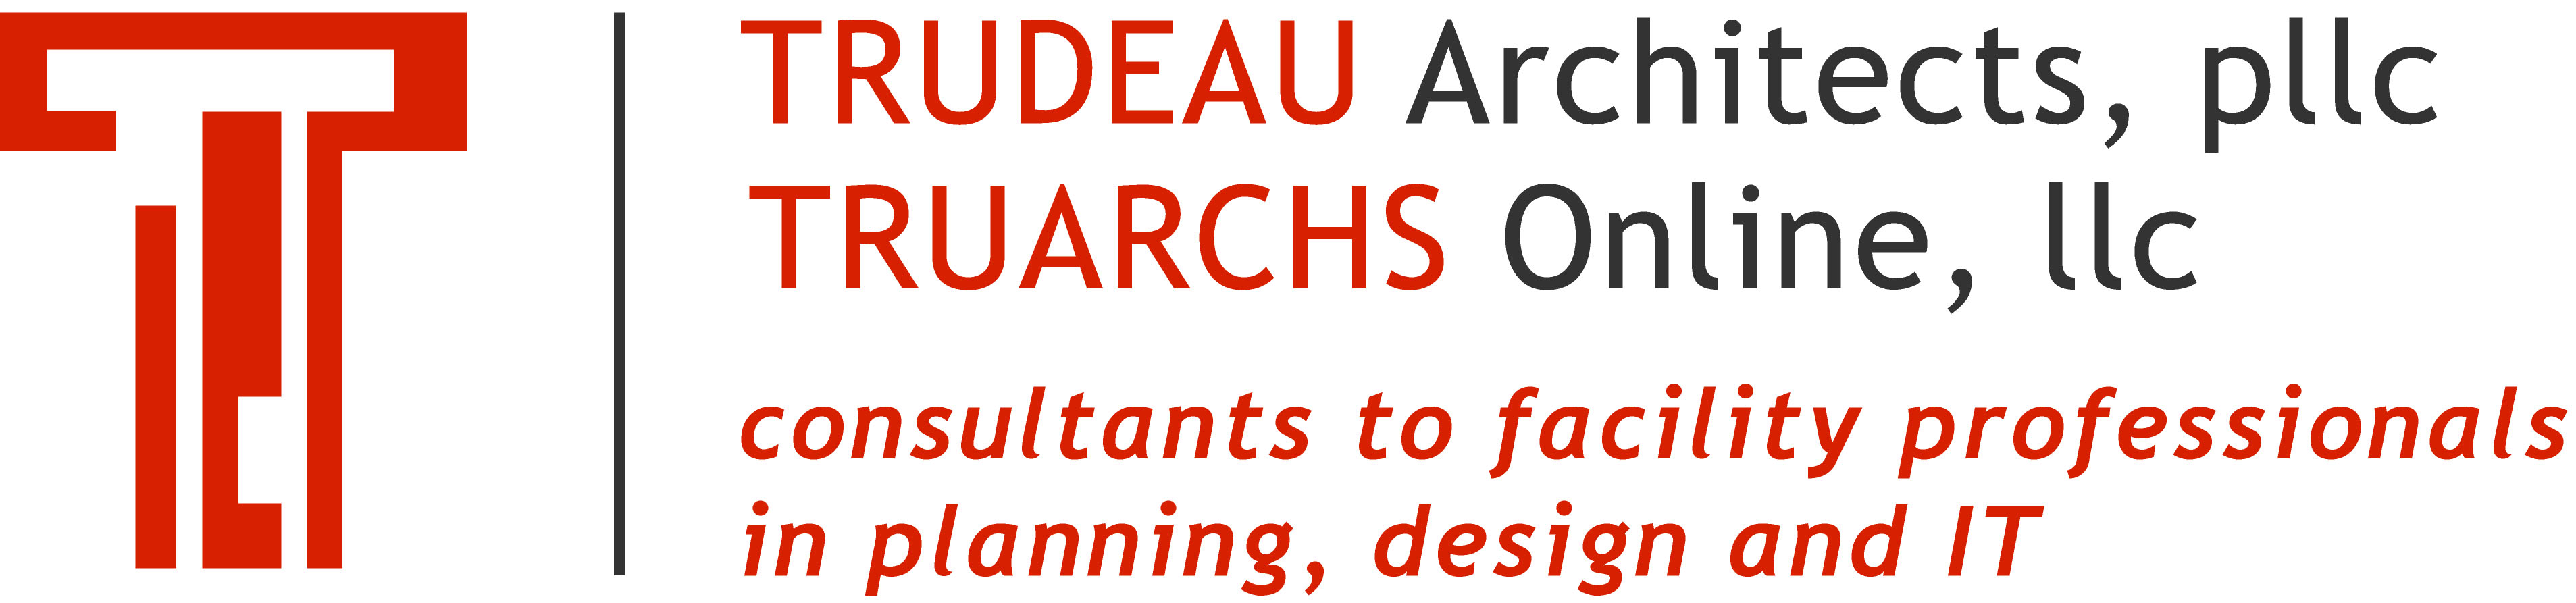 Trudeau Architects, pllc logo